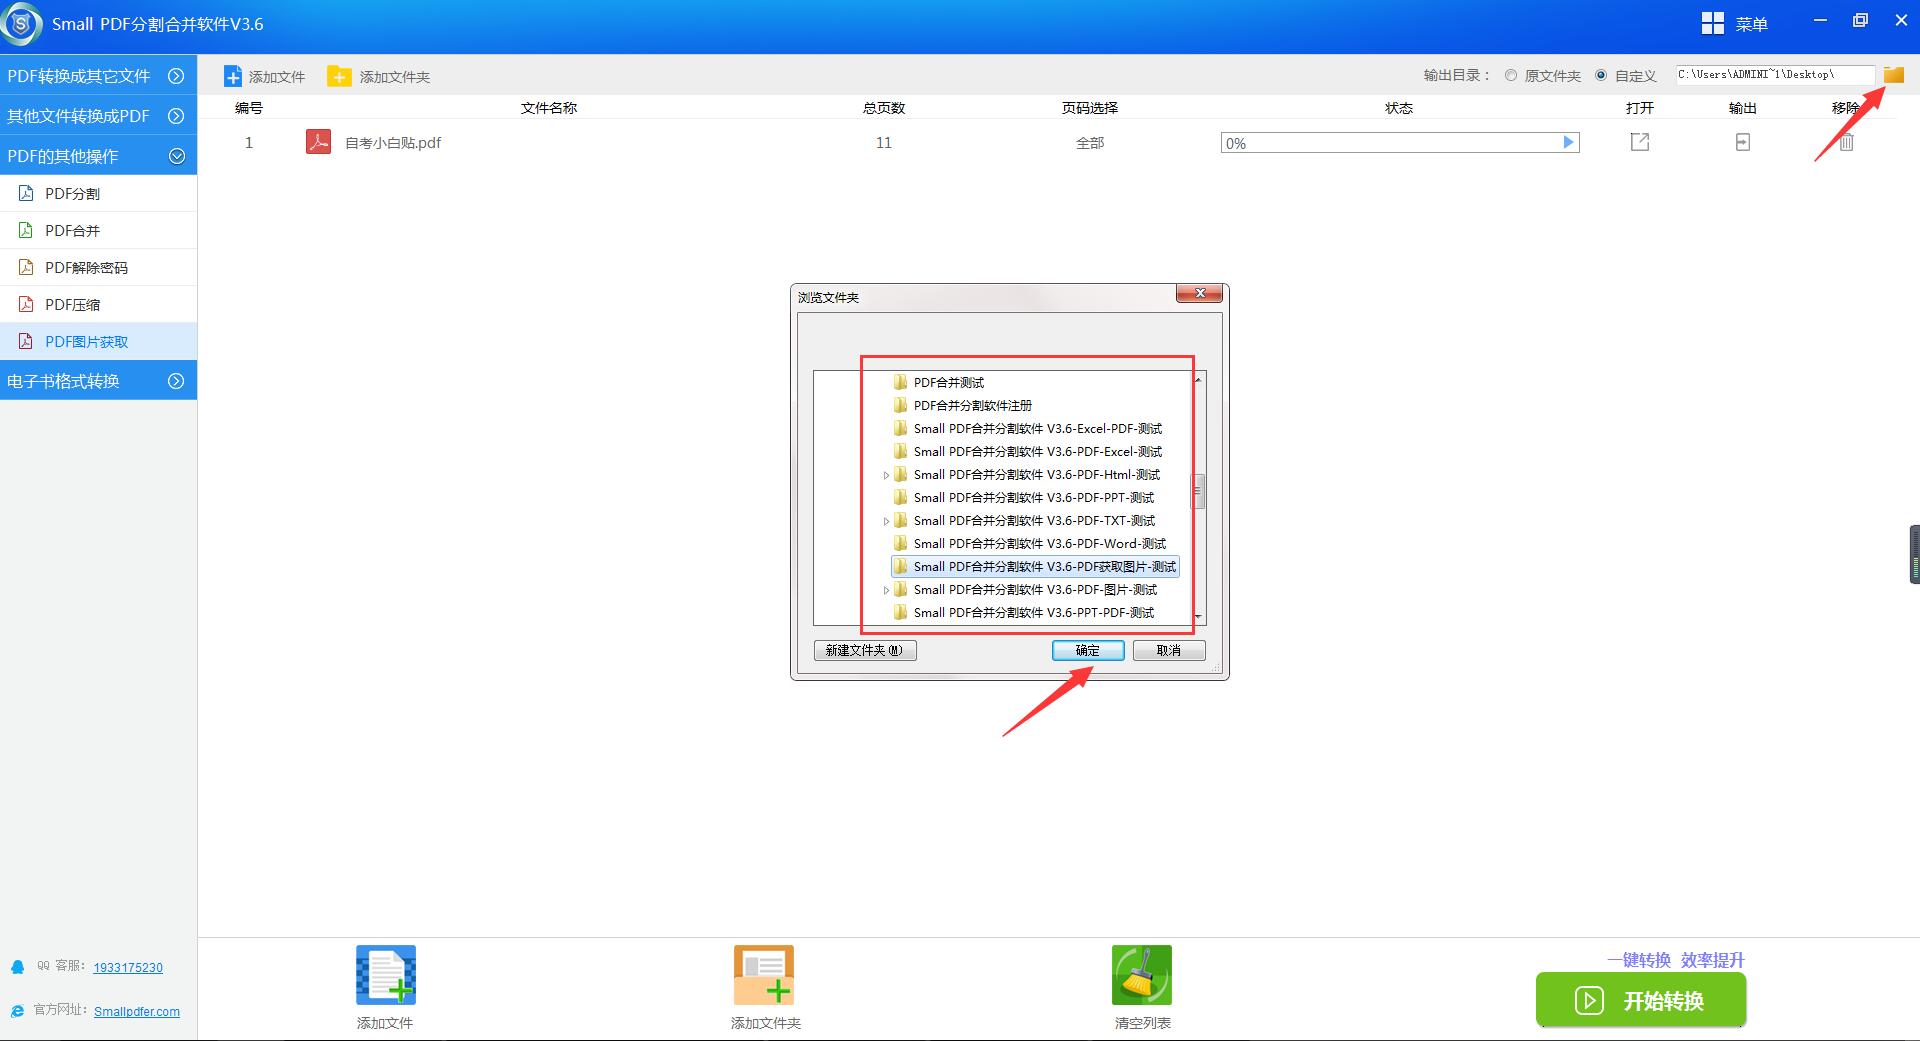 Small PDF合并分割软件提取PDF图片操作-3